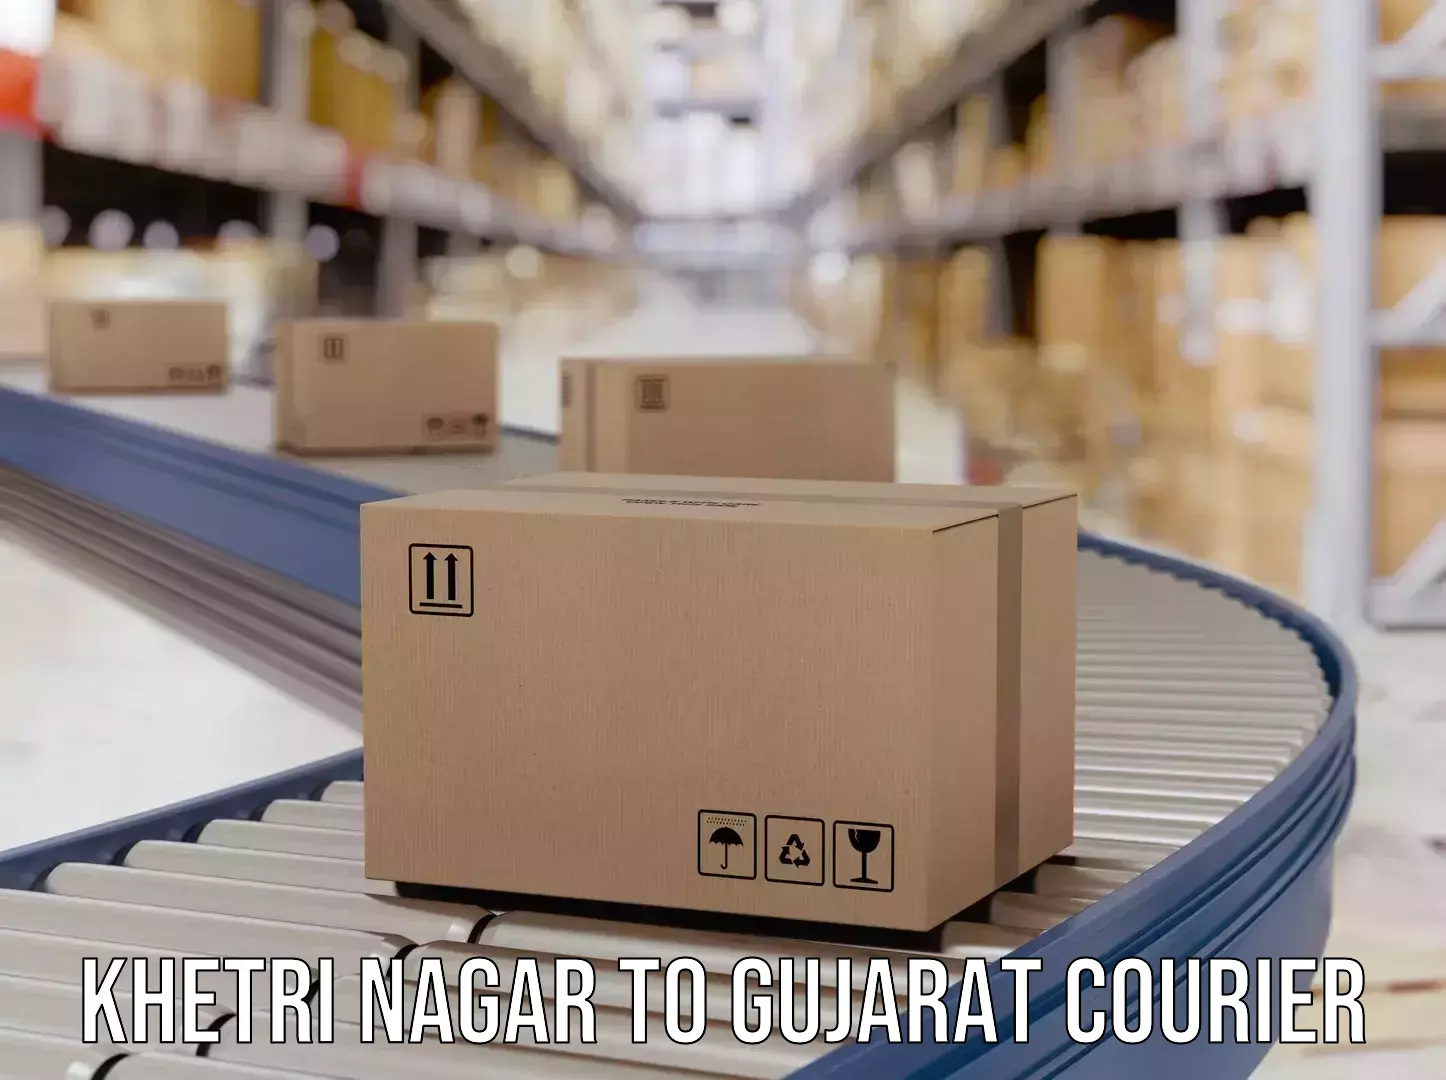 Courier app Khetri Nagar to Gujarat